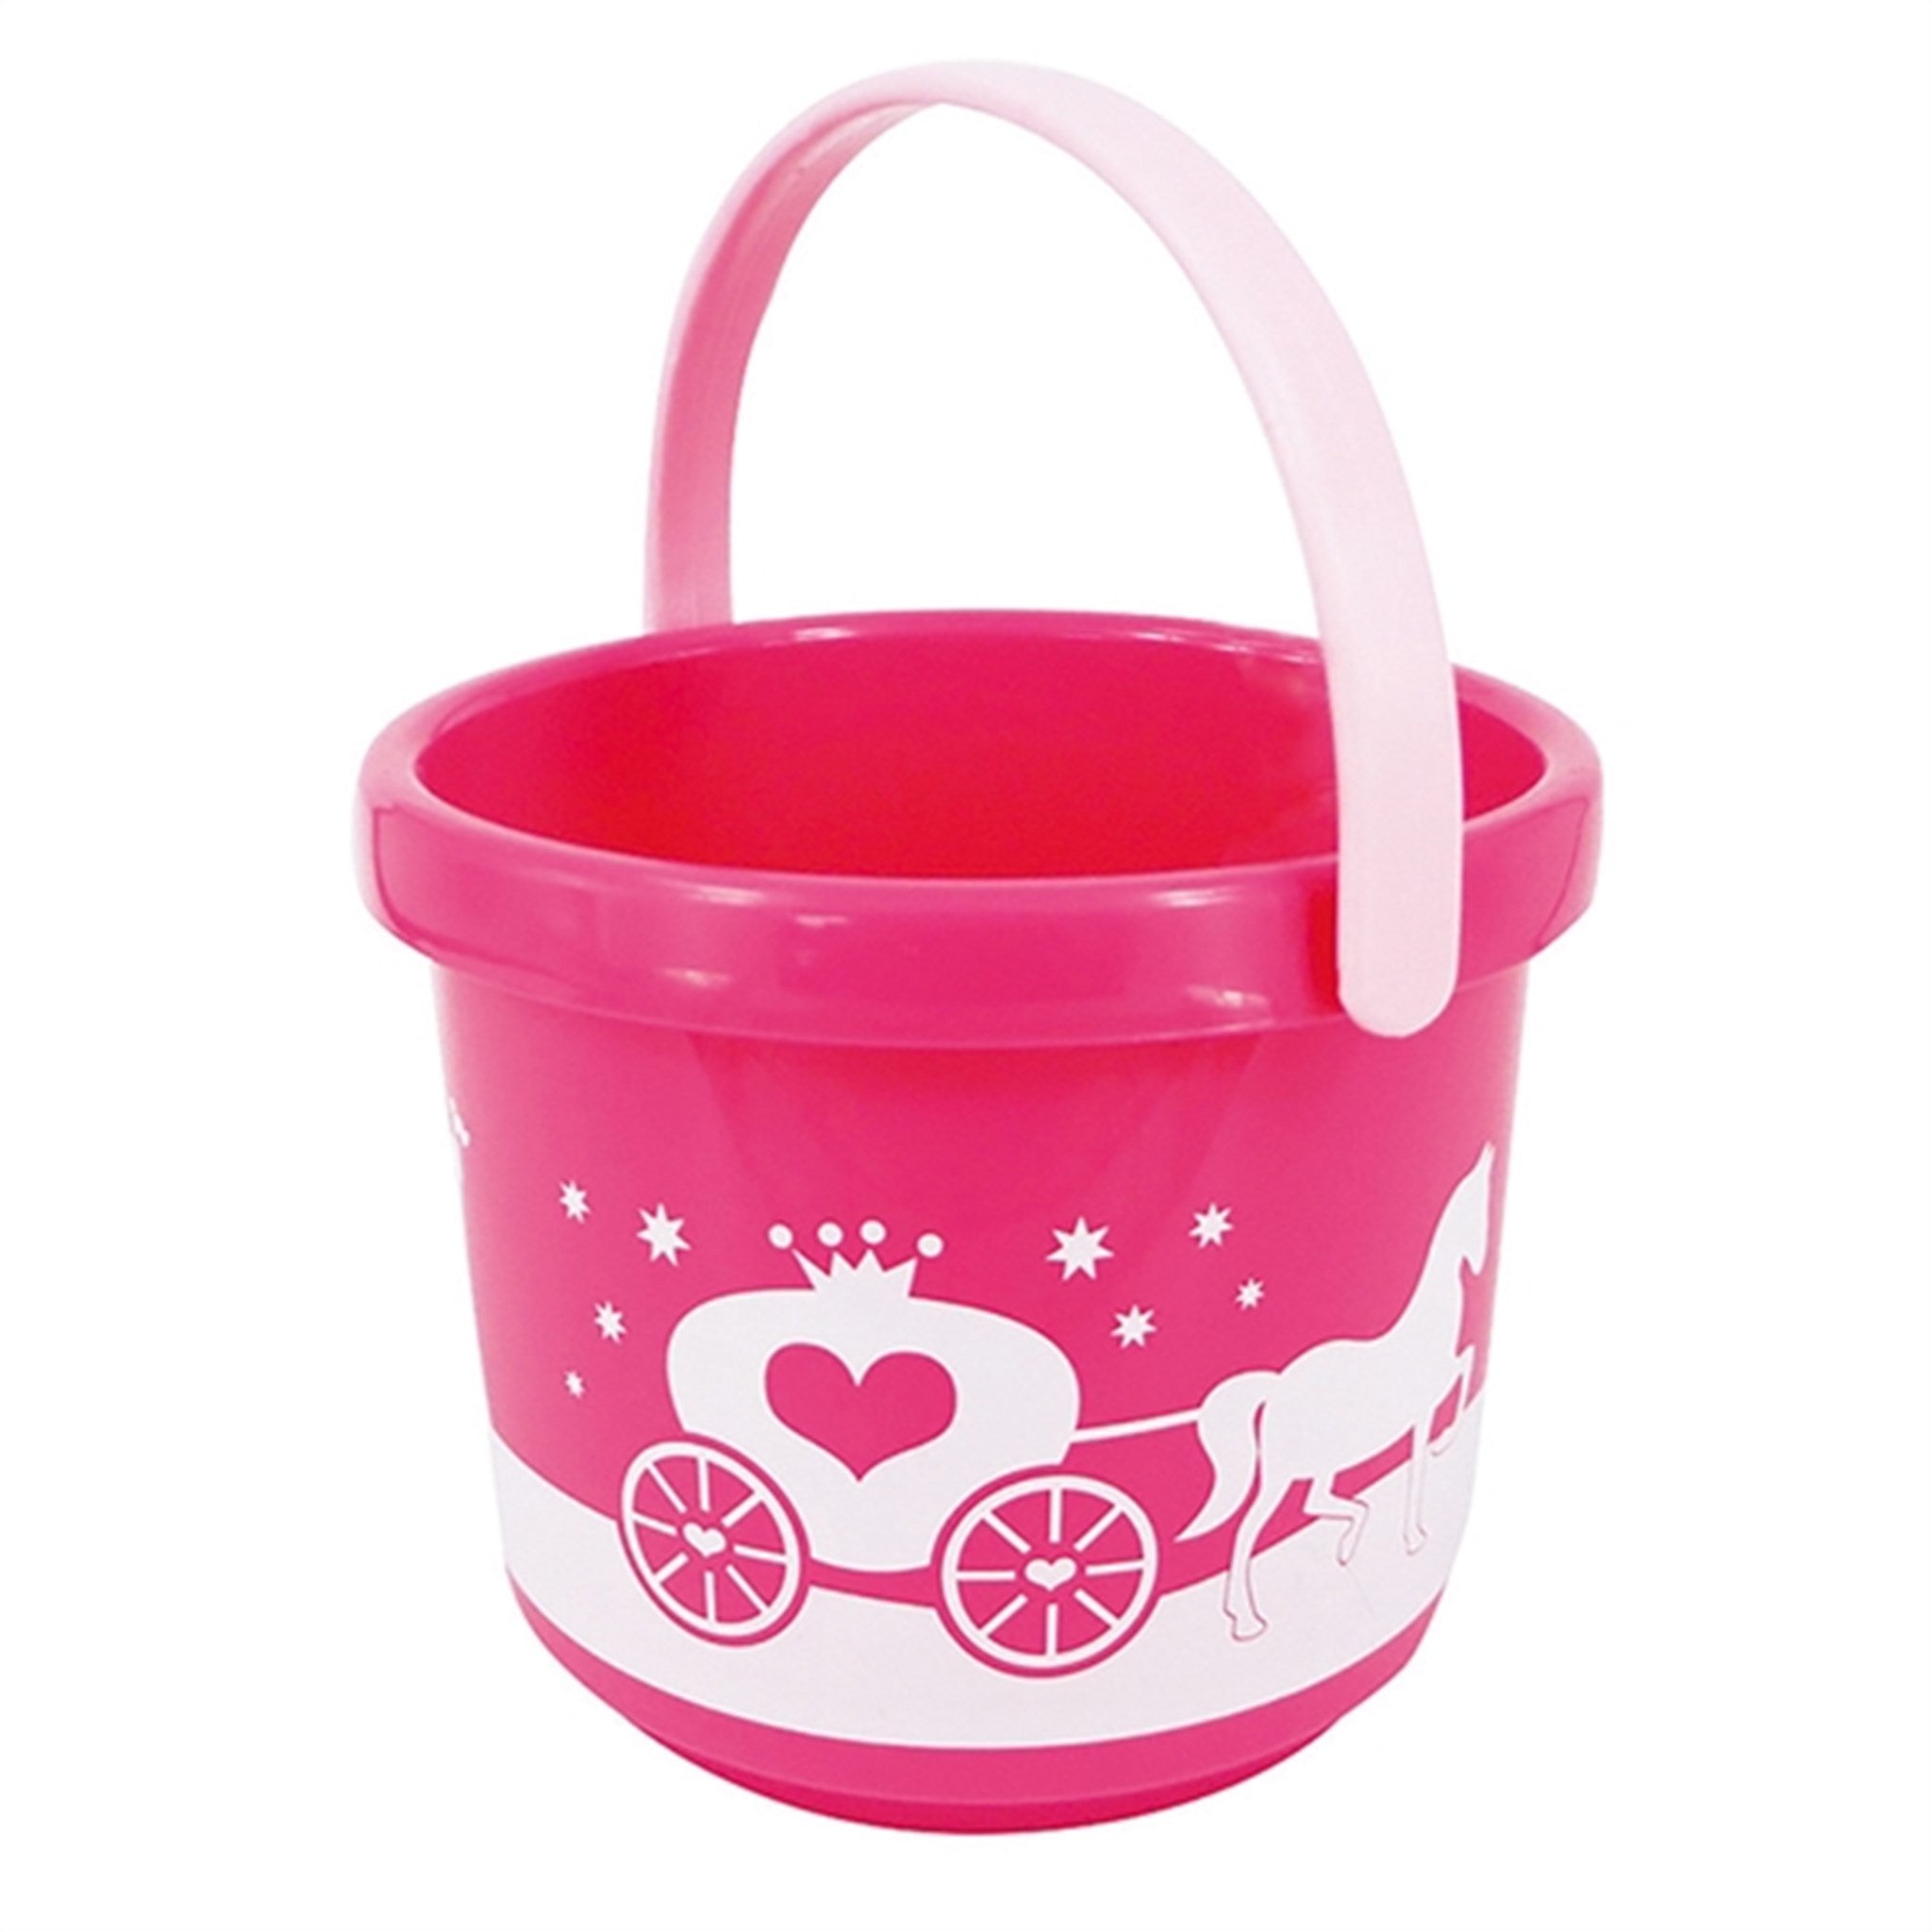 Spielstabil Small Bucket Princess - Pink